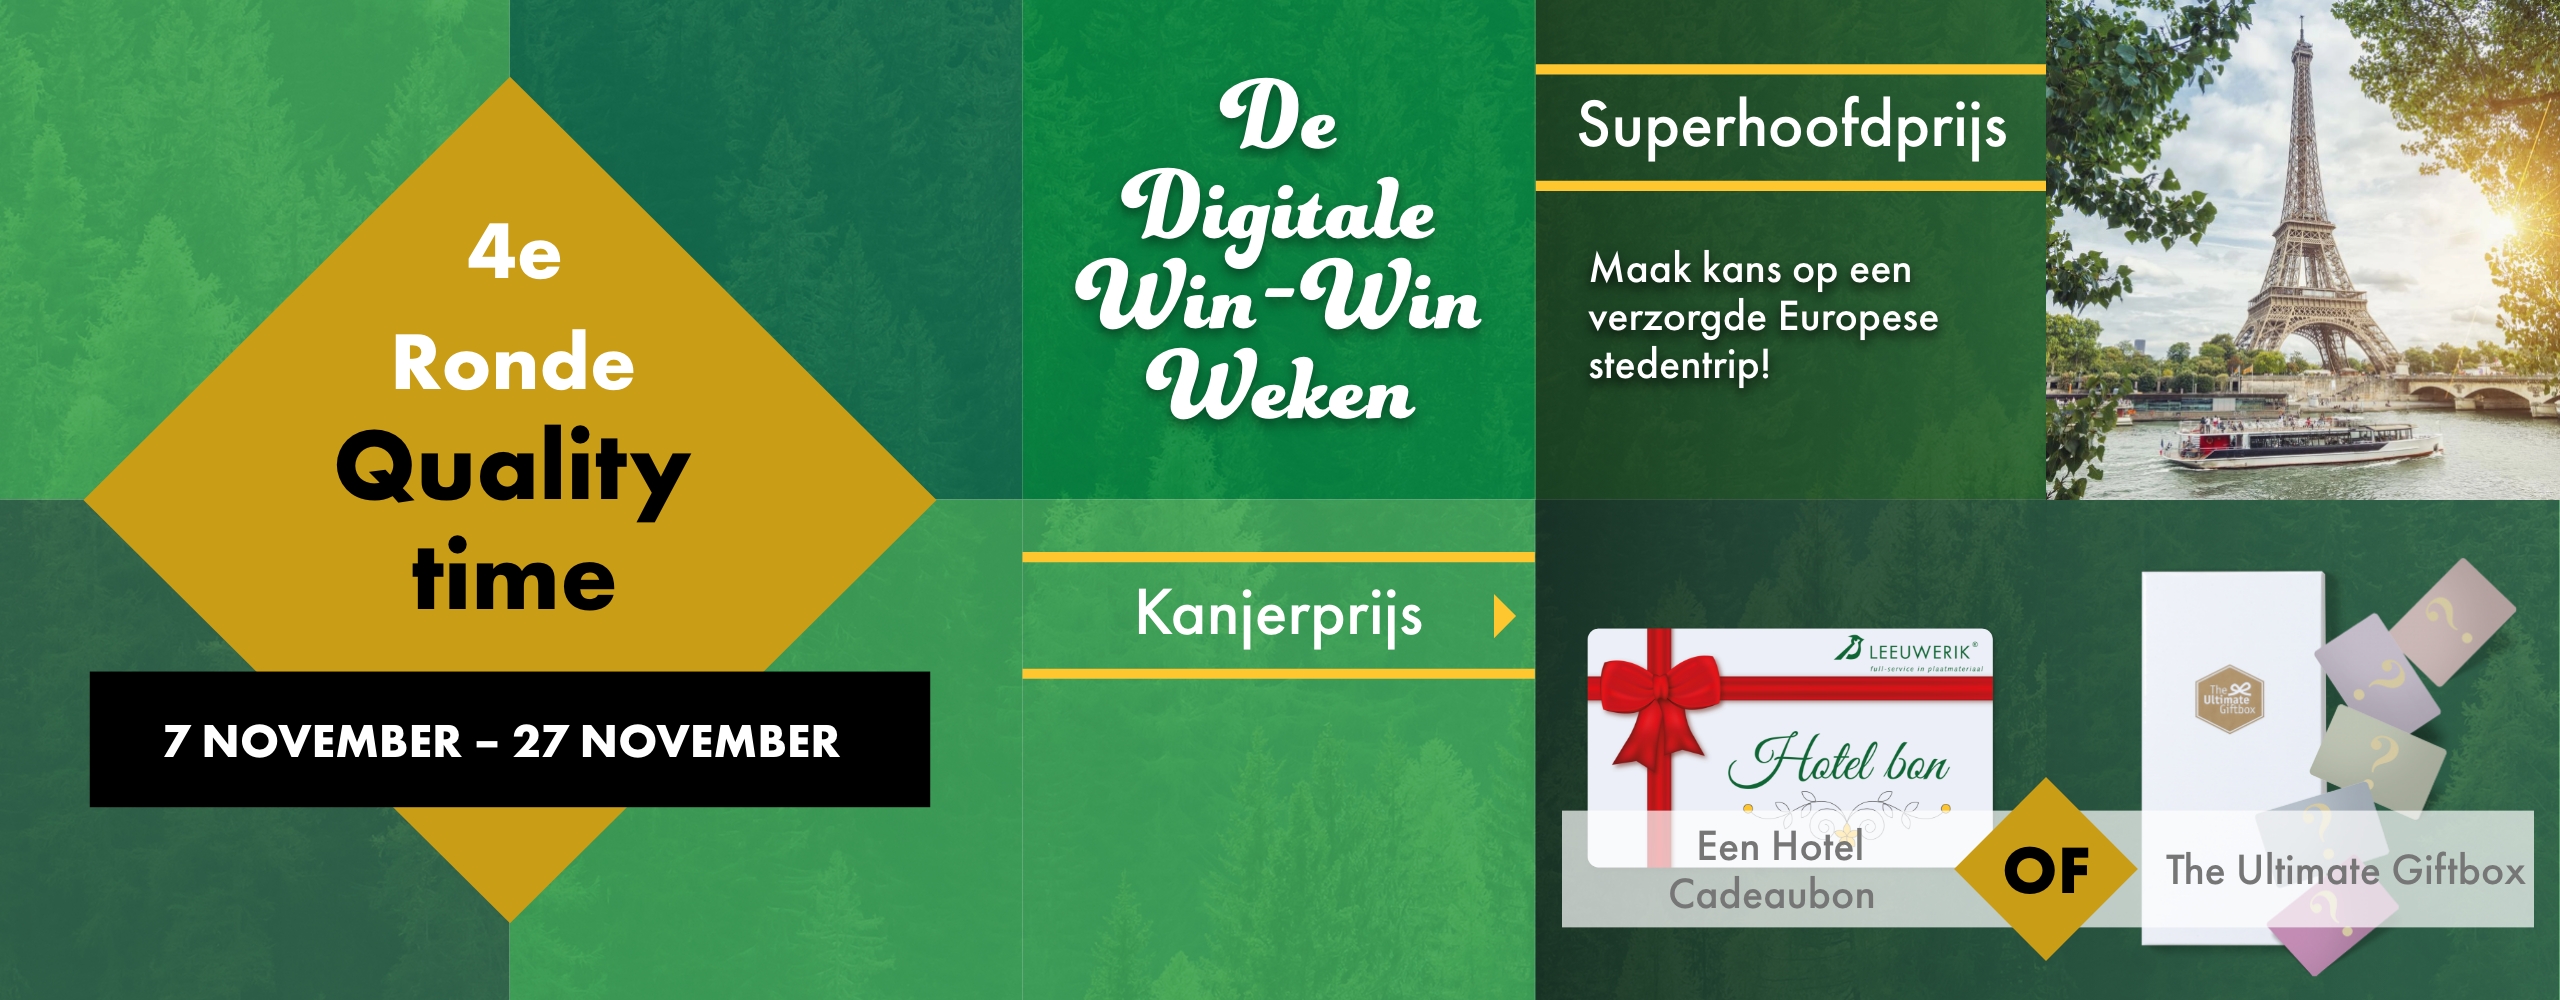 Digitale Win-Win Weken 3e ronde | Leeuwerik